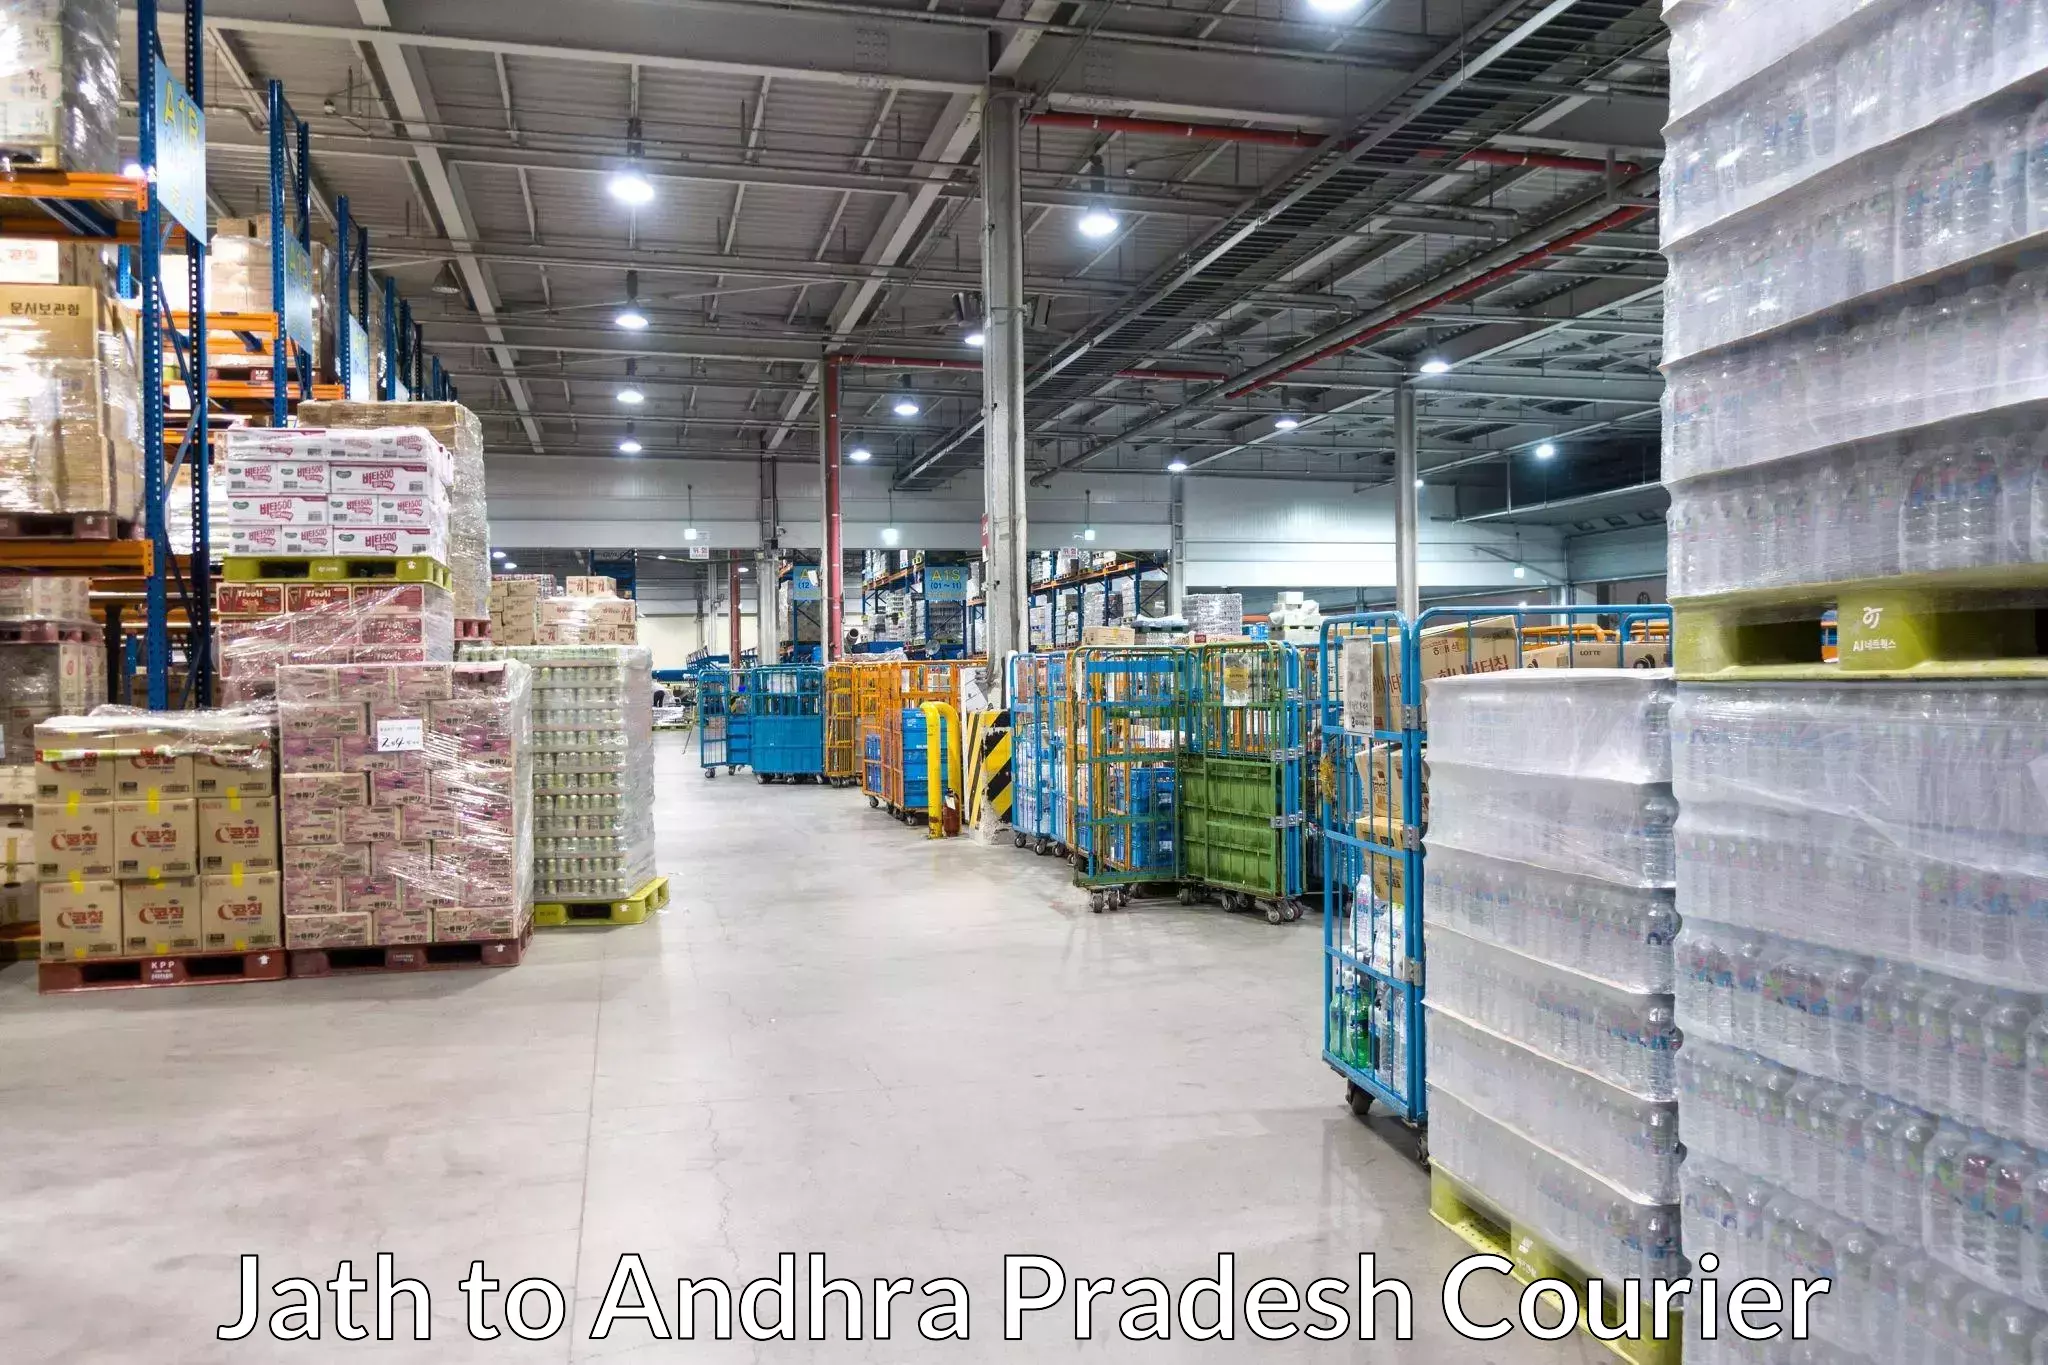 Courier service innovation Jath to Andhra Pradesh